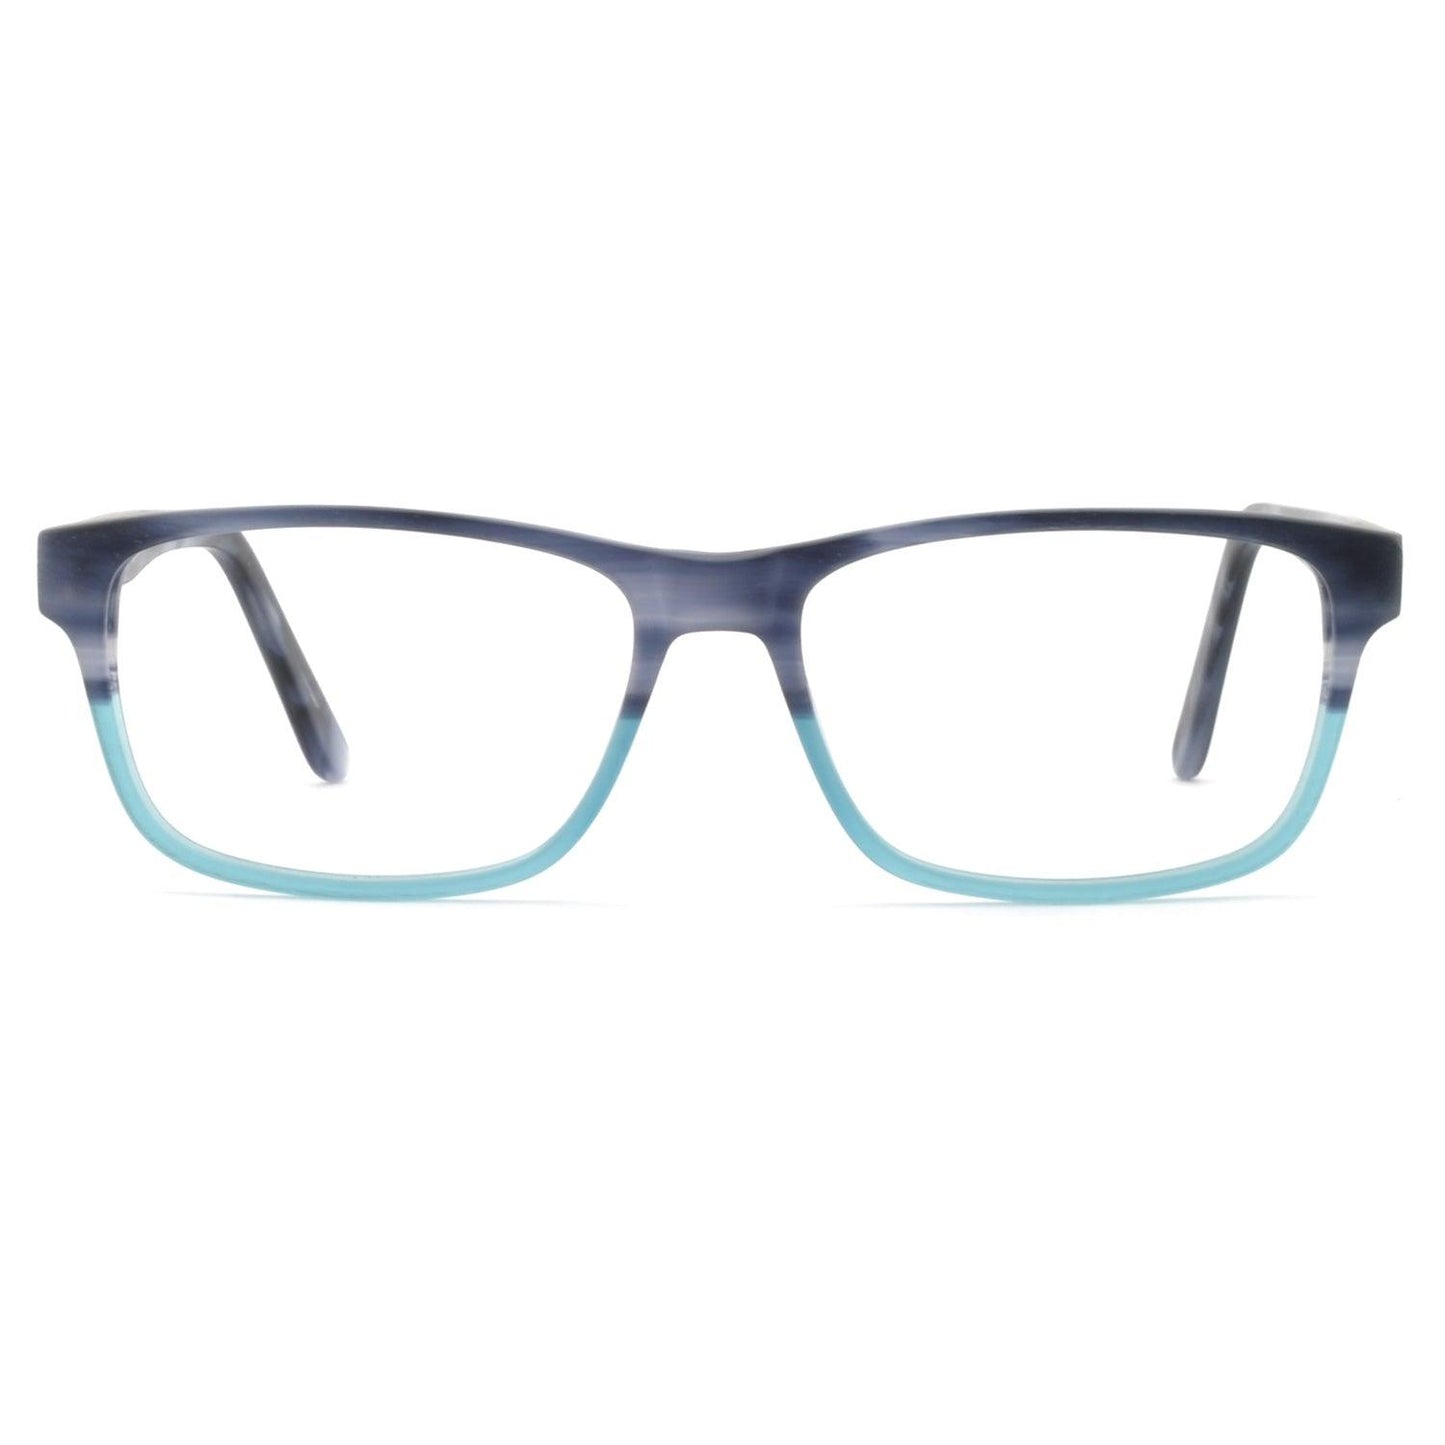 Men's Optical Frame Fashion Glasses Frame For Prescription BAUDO - Occichiari 